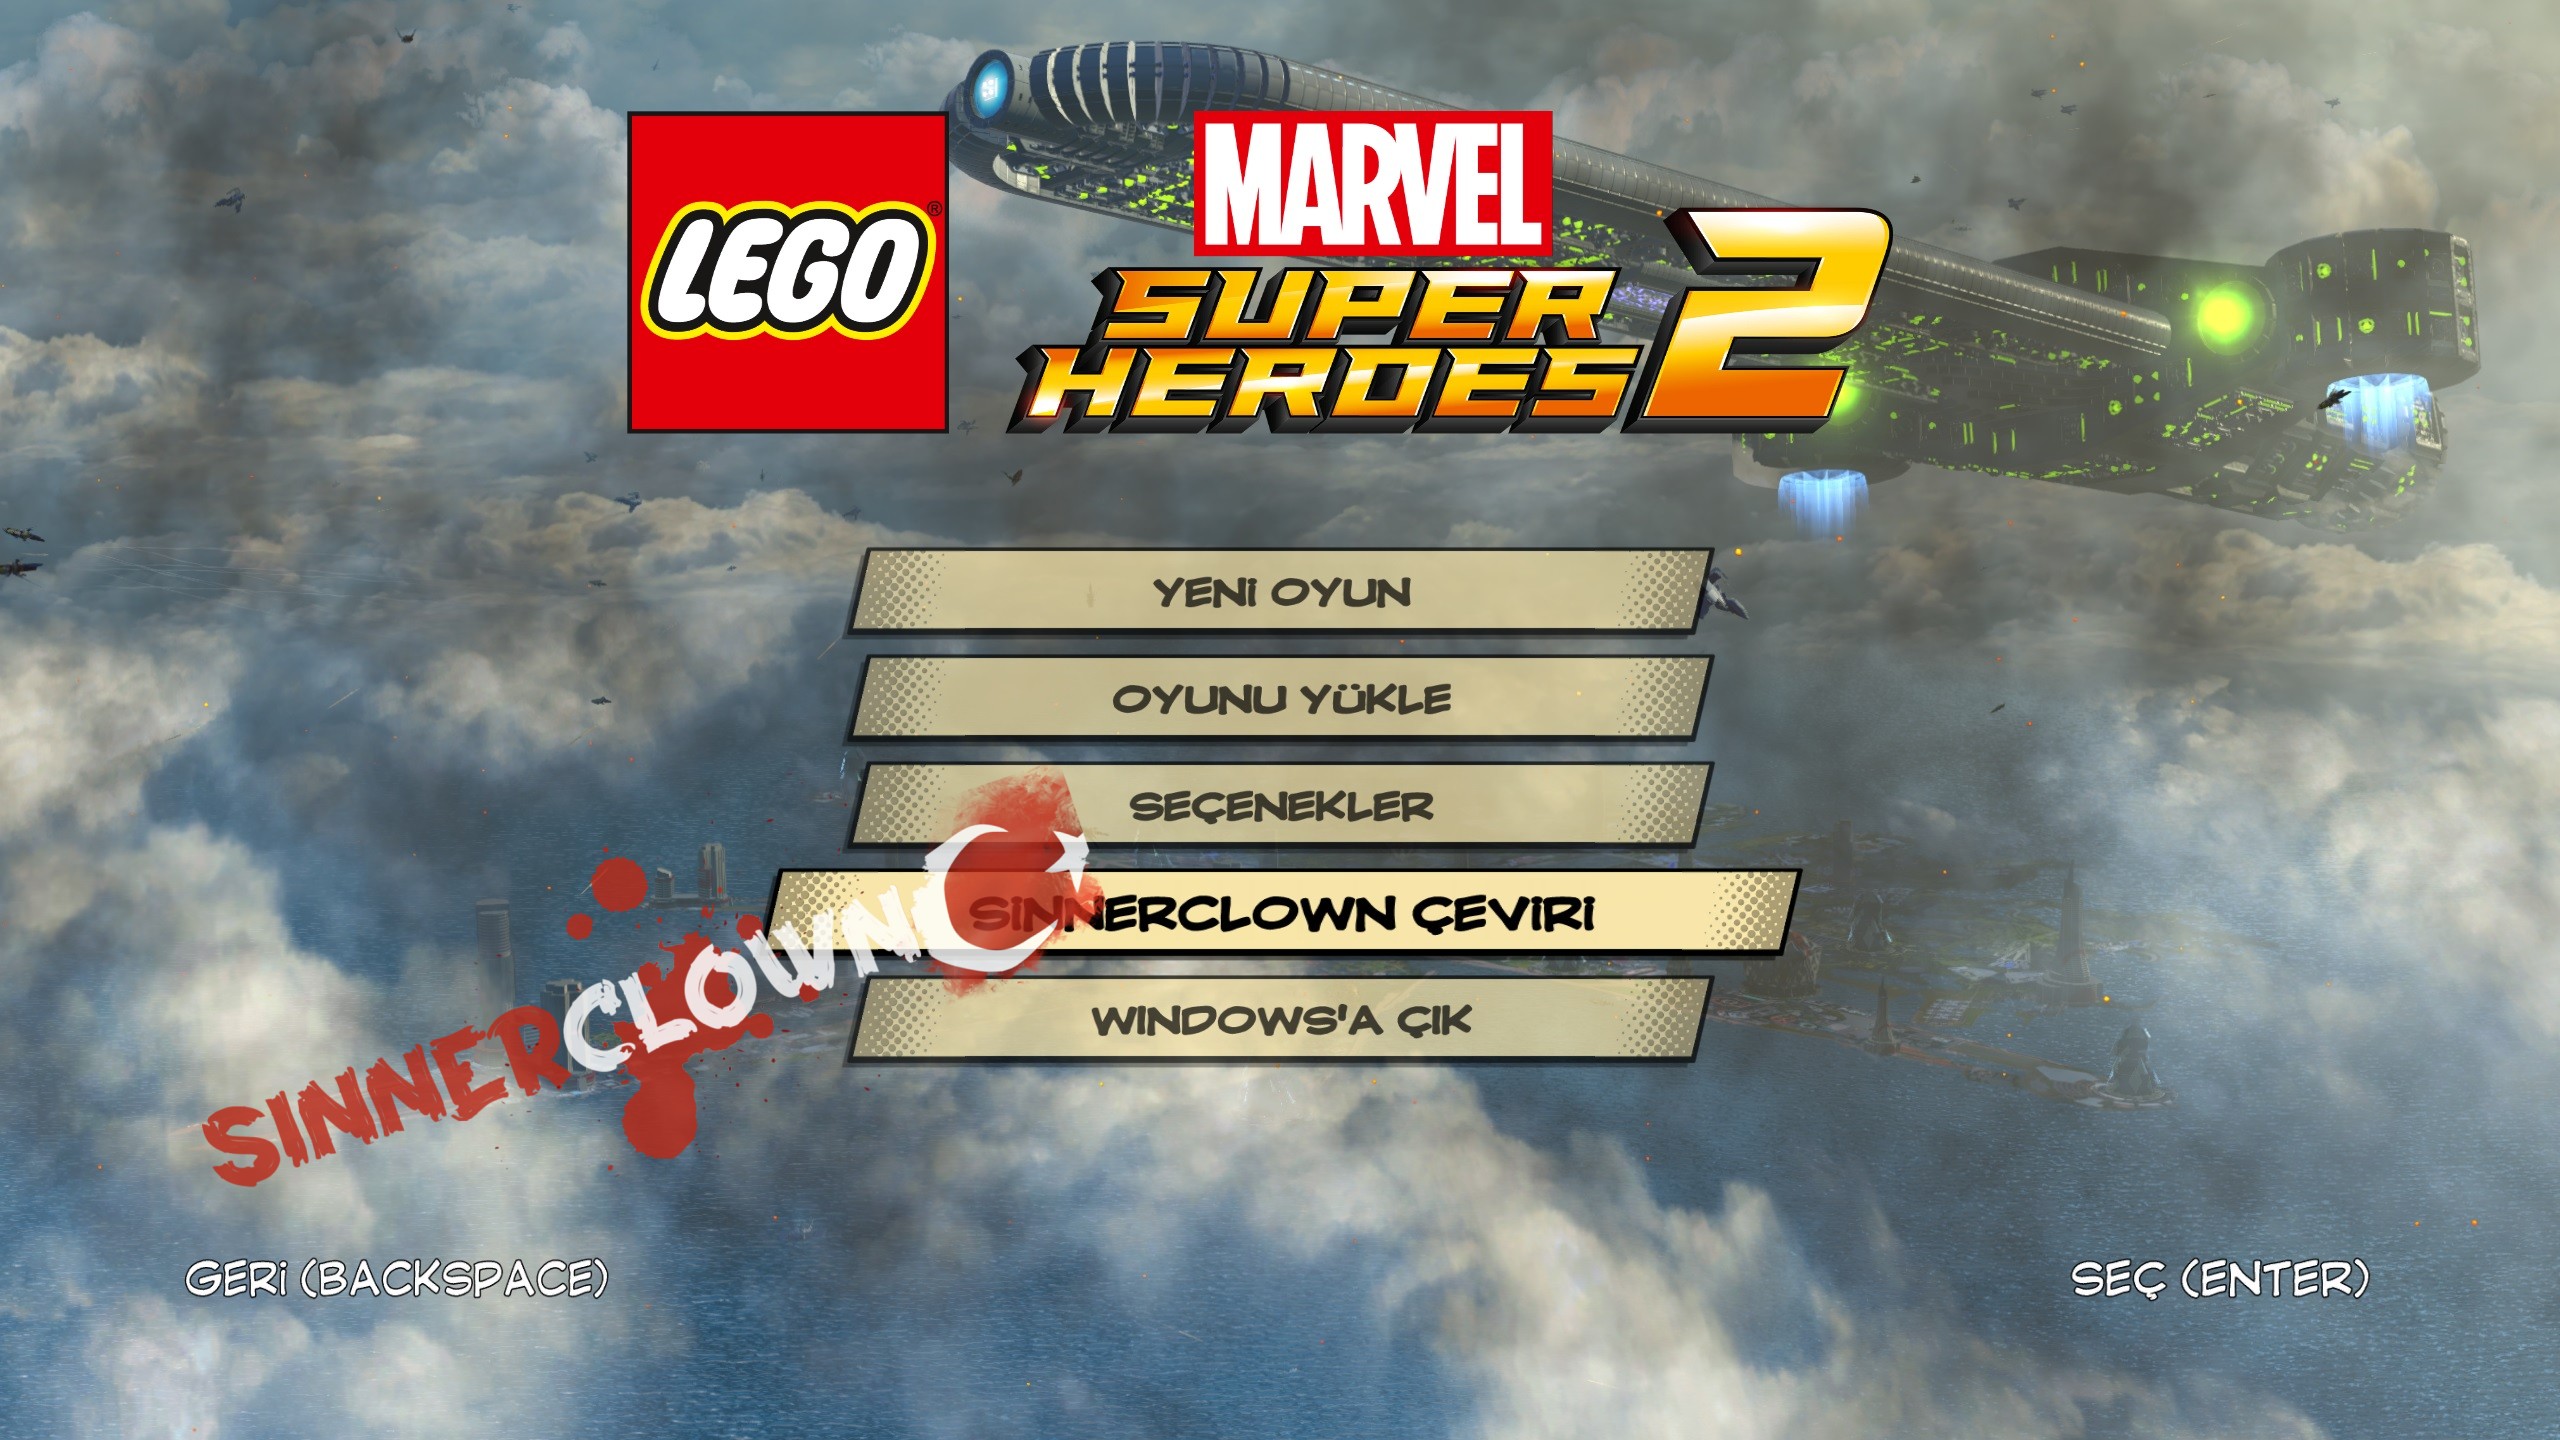 _LEGO_MarvelSuperHeroes 2.jpg